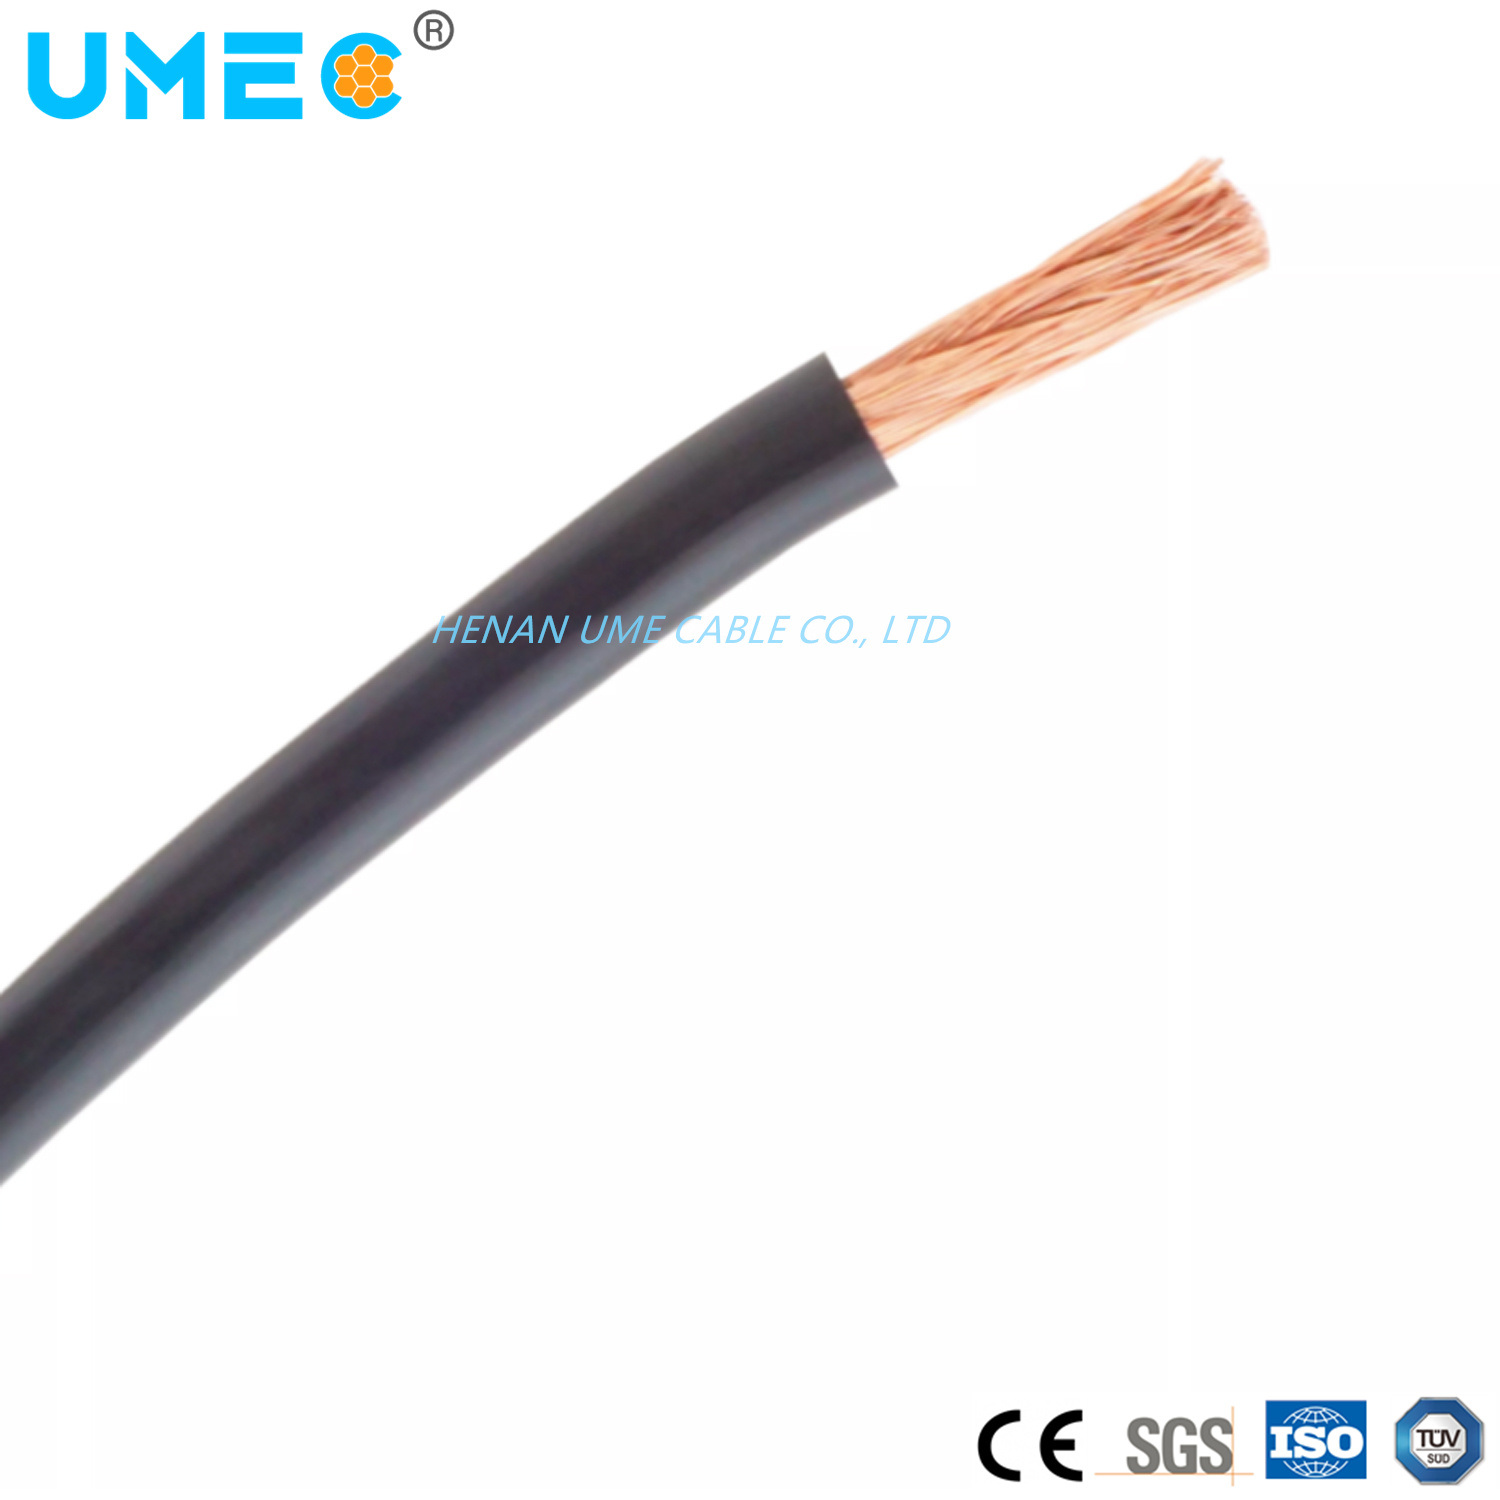 ASTM Free Sample Bare Copper Wire PVC Insulated 450/750V Single-Core Copper Stranded Wire 1.5/2.5/4.0/6.0mm RV Winding Wire Cable